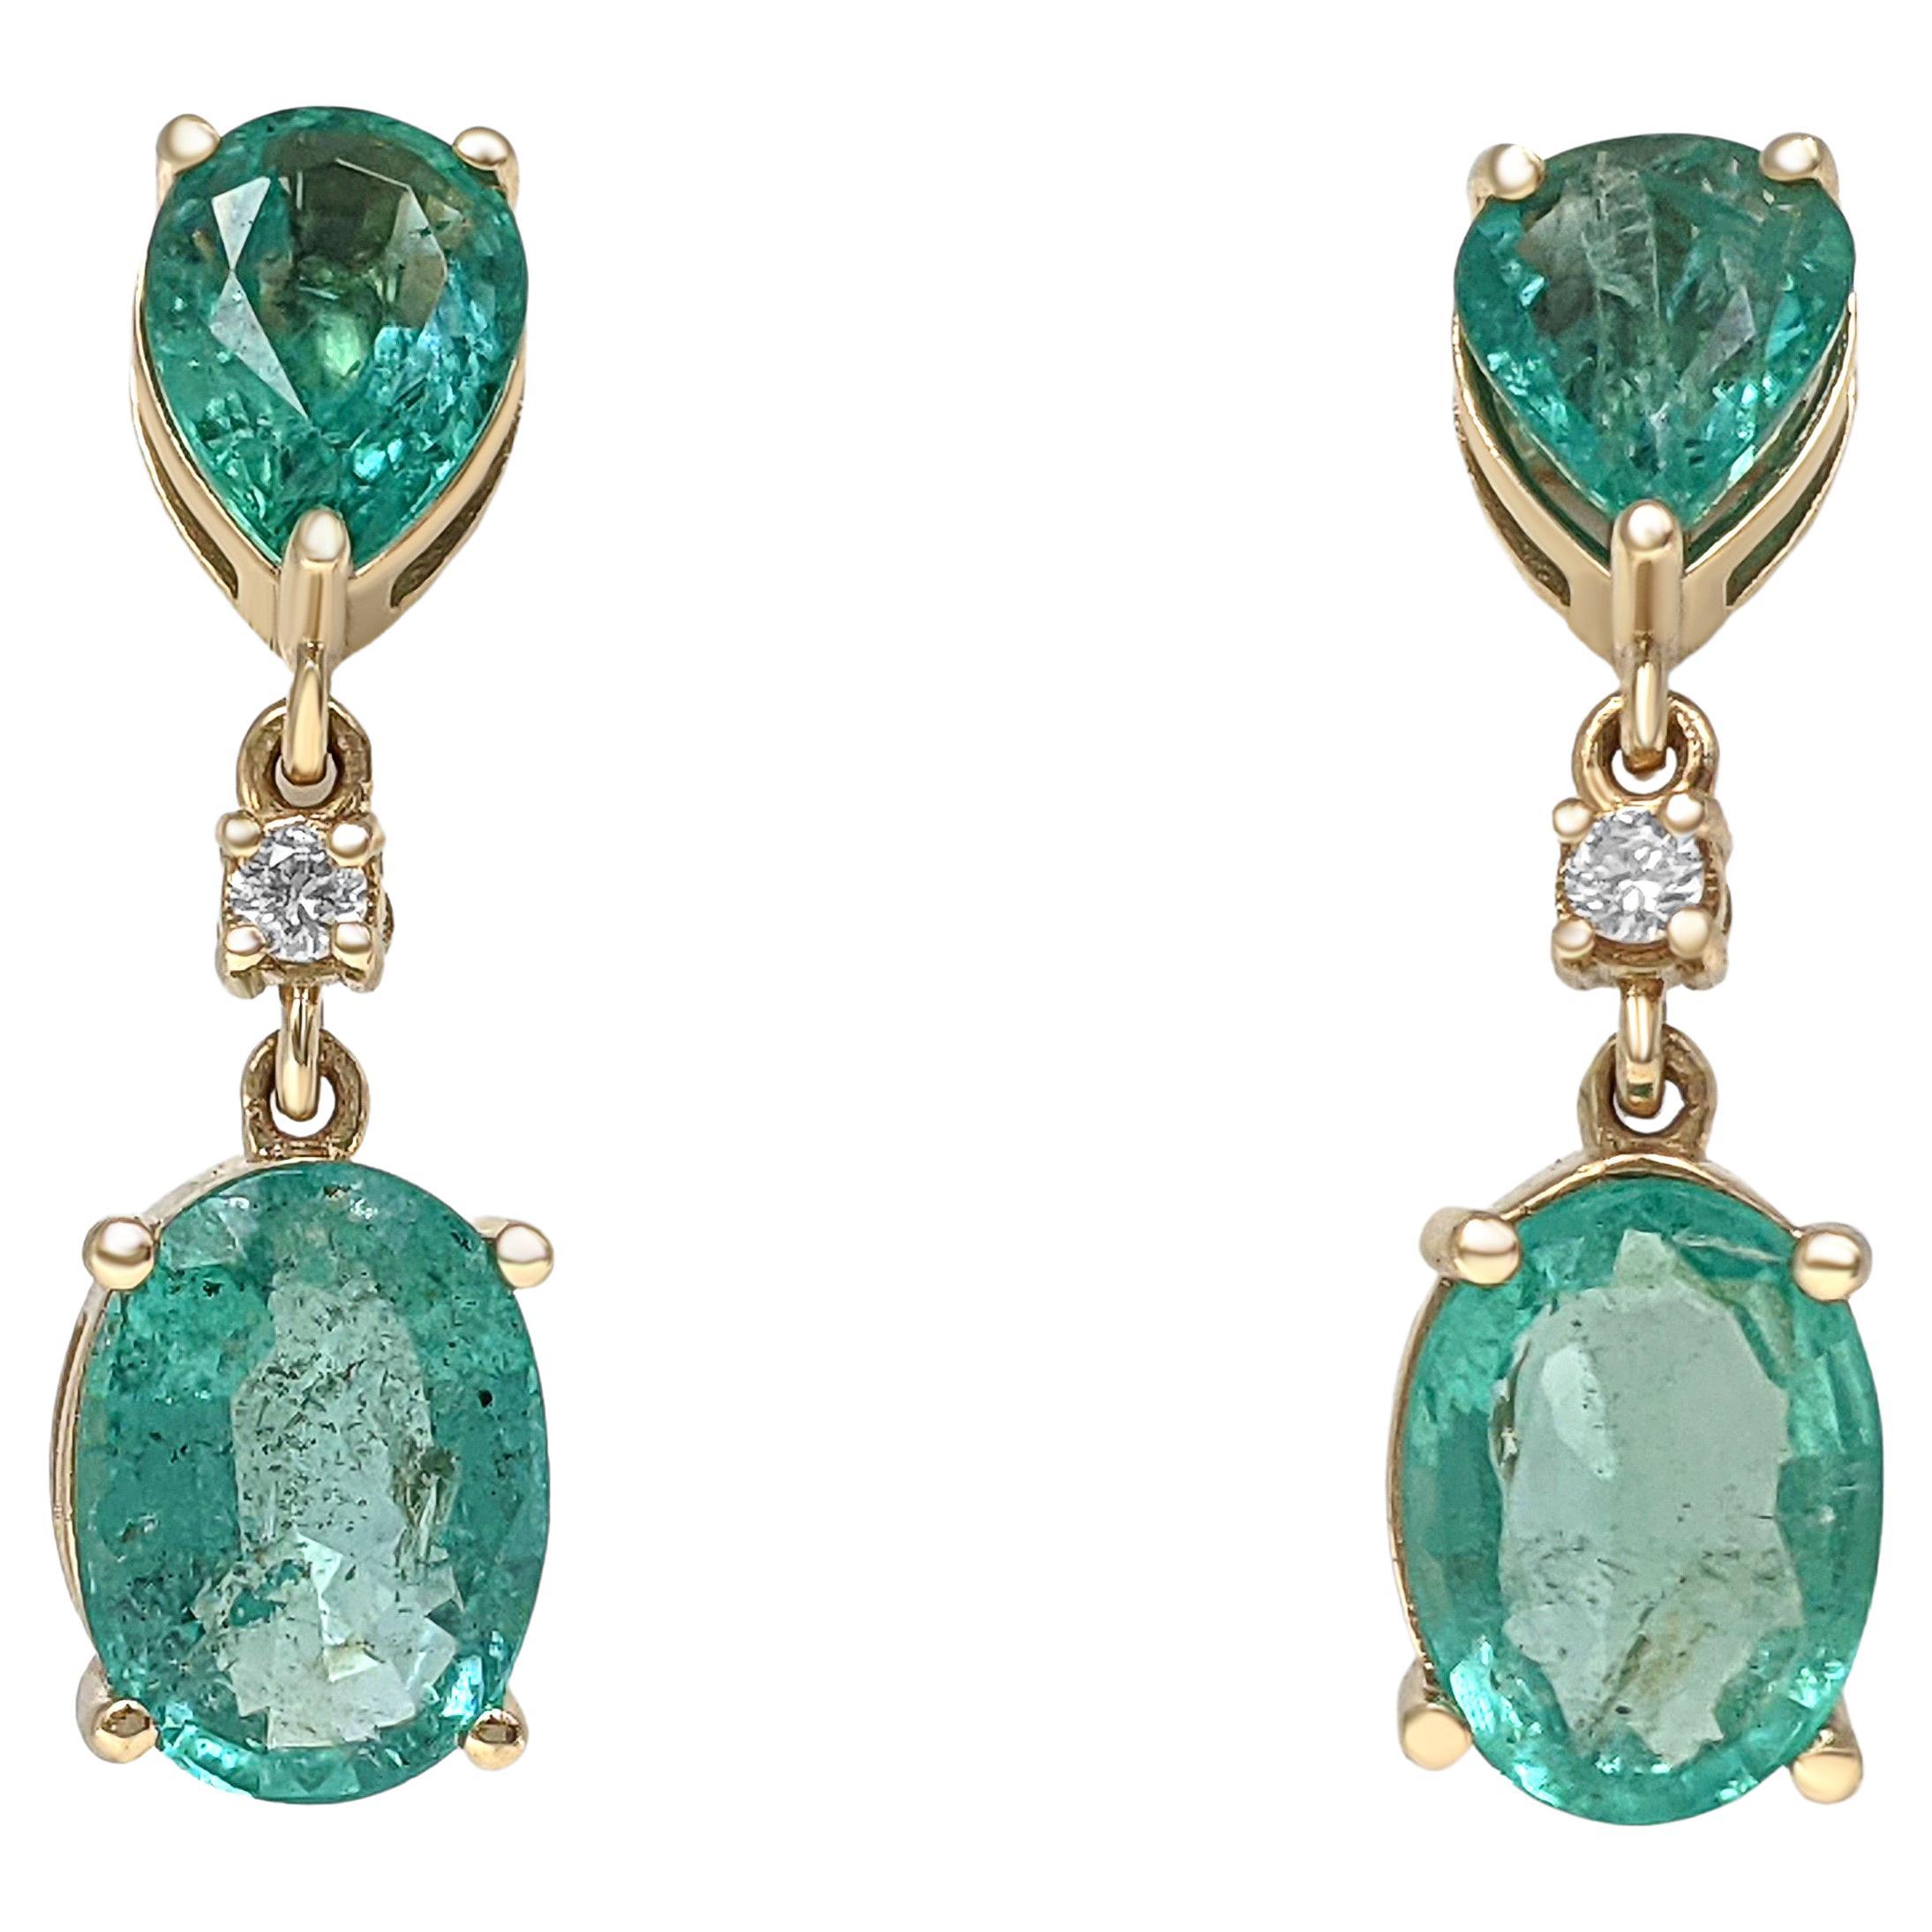 NO RESERVE - 3.37cttw Emerald & 0.06 Carat Diamonds, 14k Yellow Gold Earrings